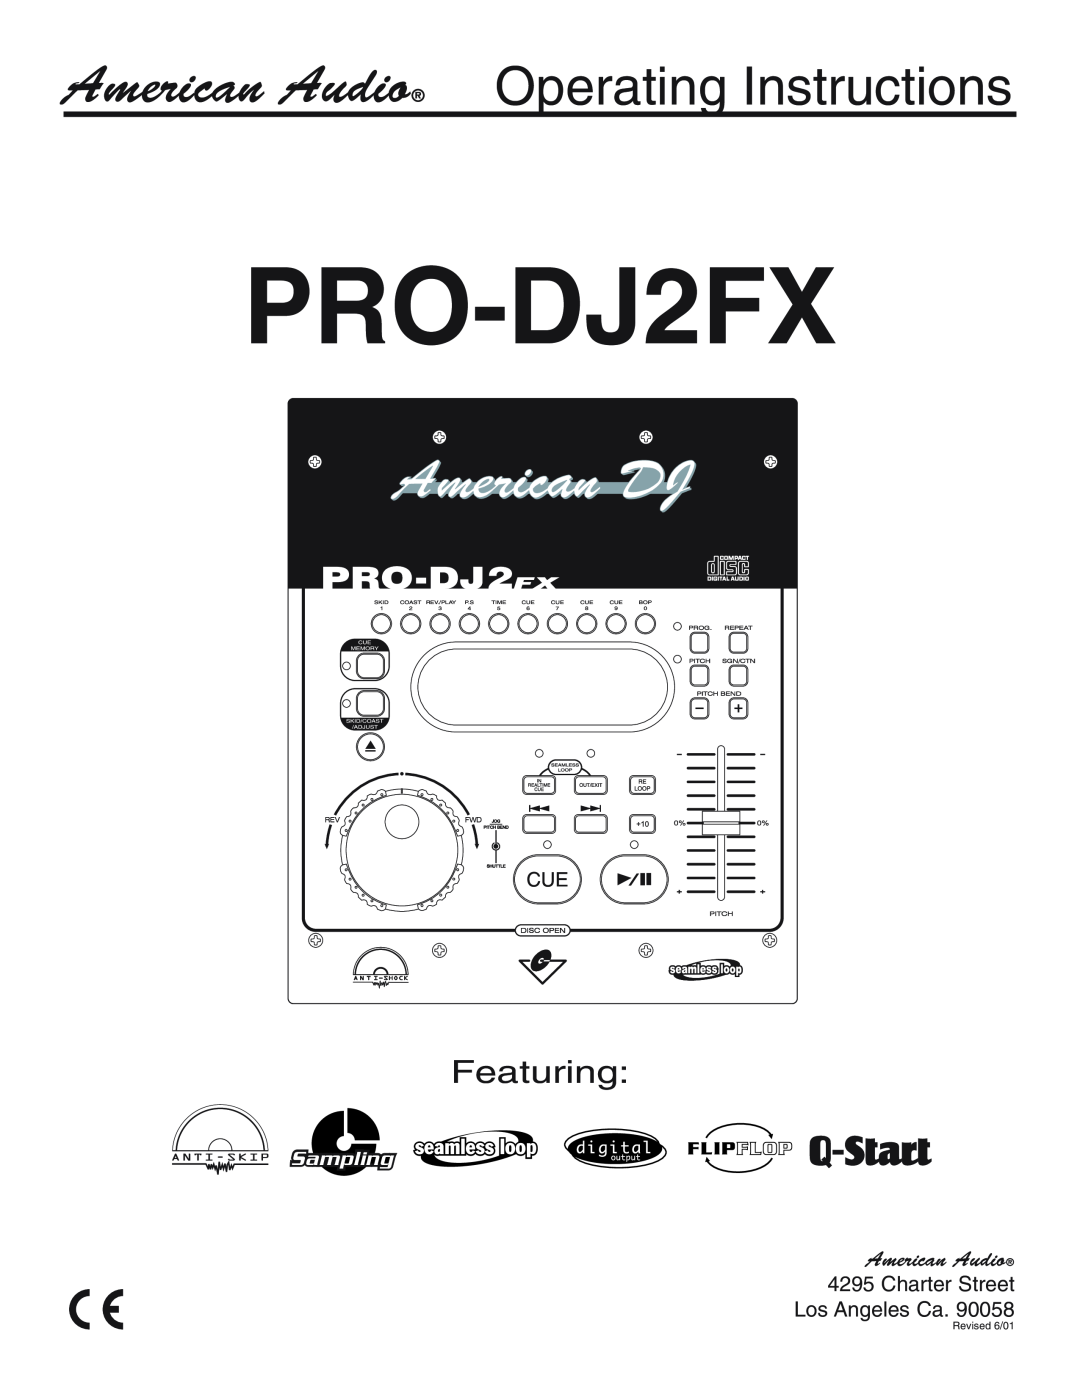 American Audio PRO-DJ2FX operating instructions American Audio Operating Instructions, Featuring, Sampling, Flipflop 